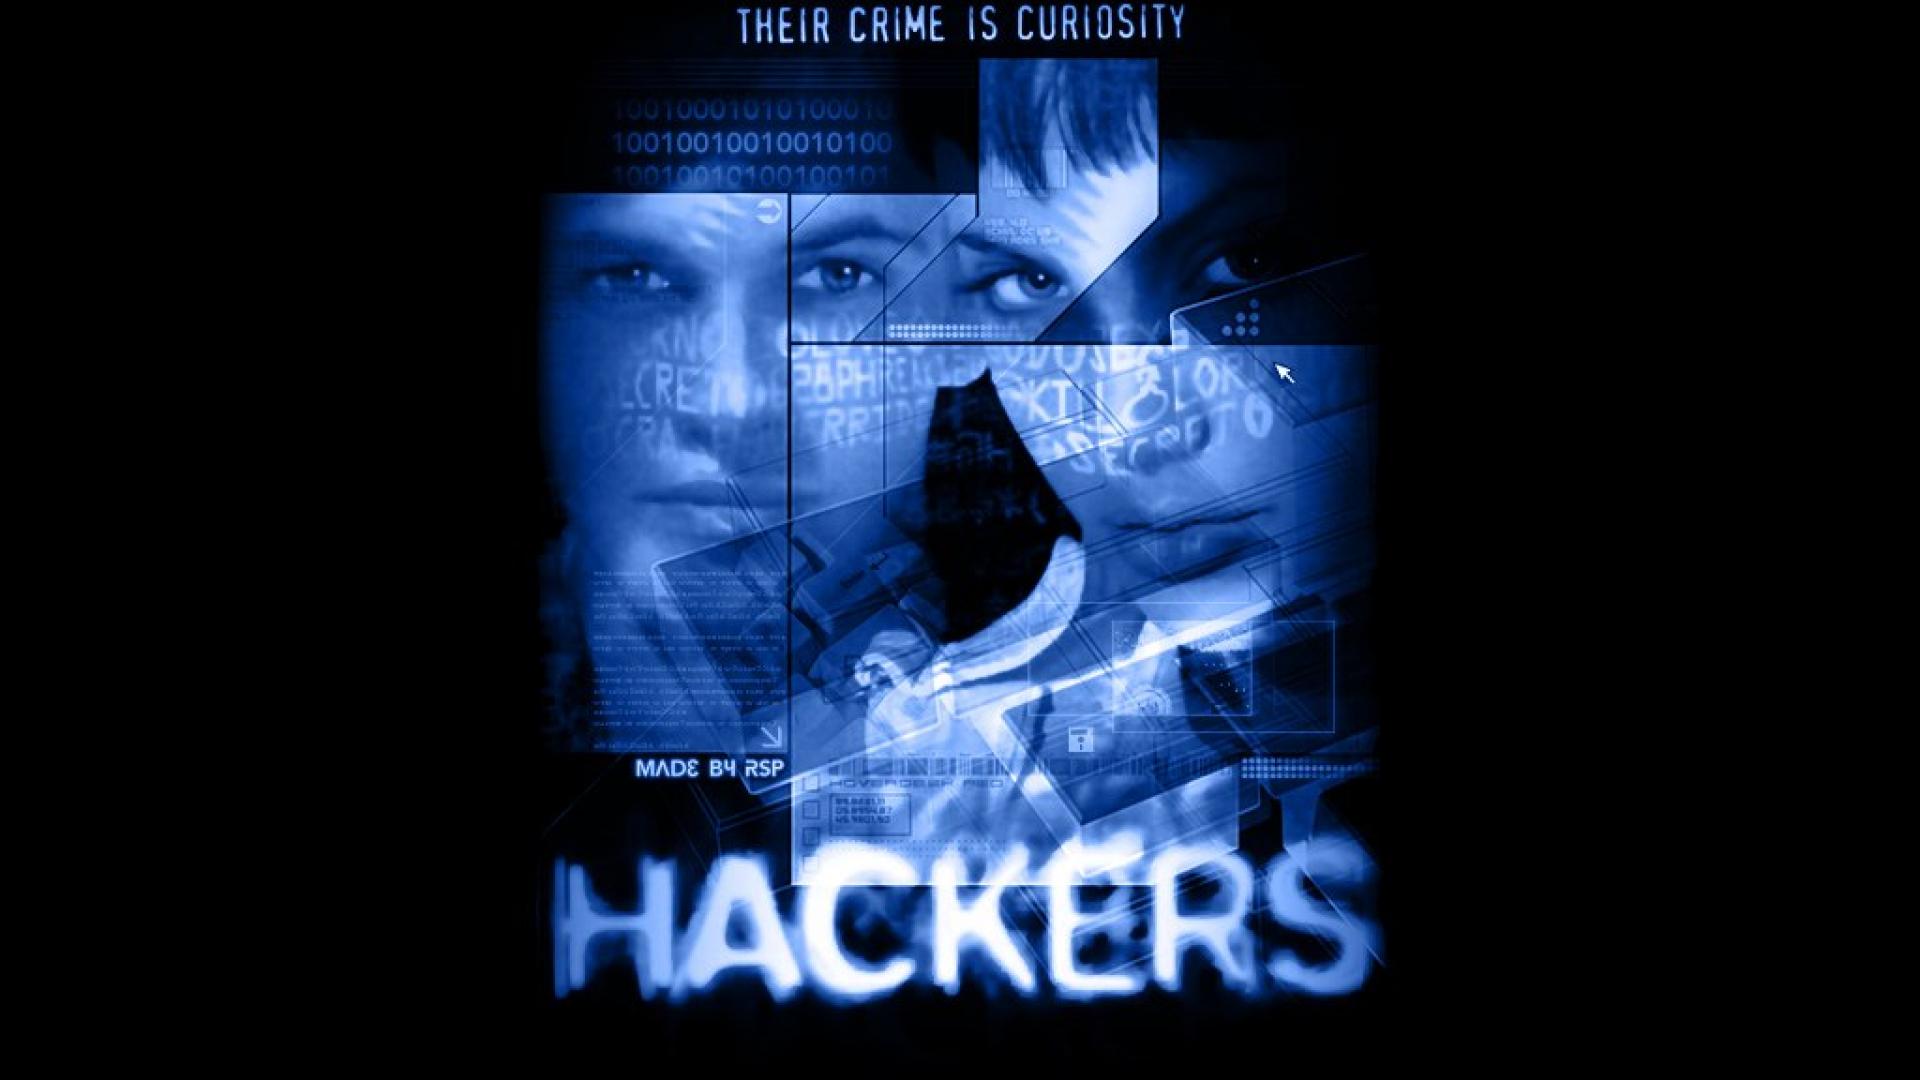 Hackers movie hd wallpaper - HQ Desktop Wallpapers